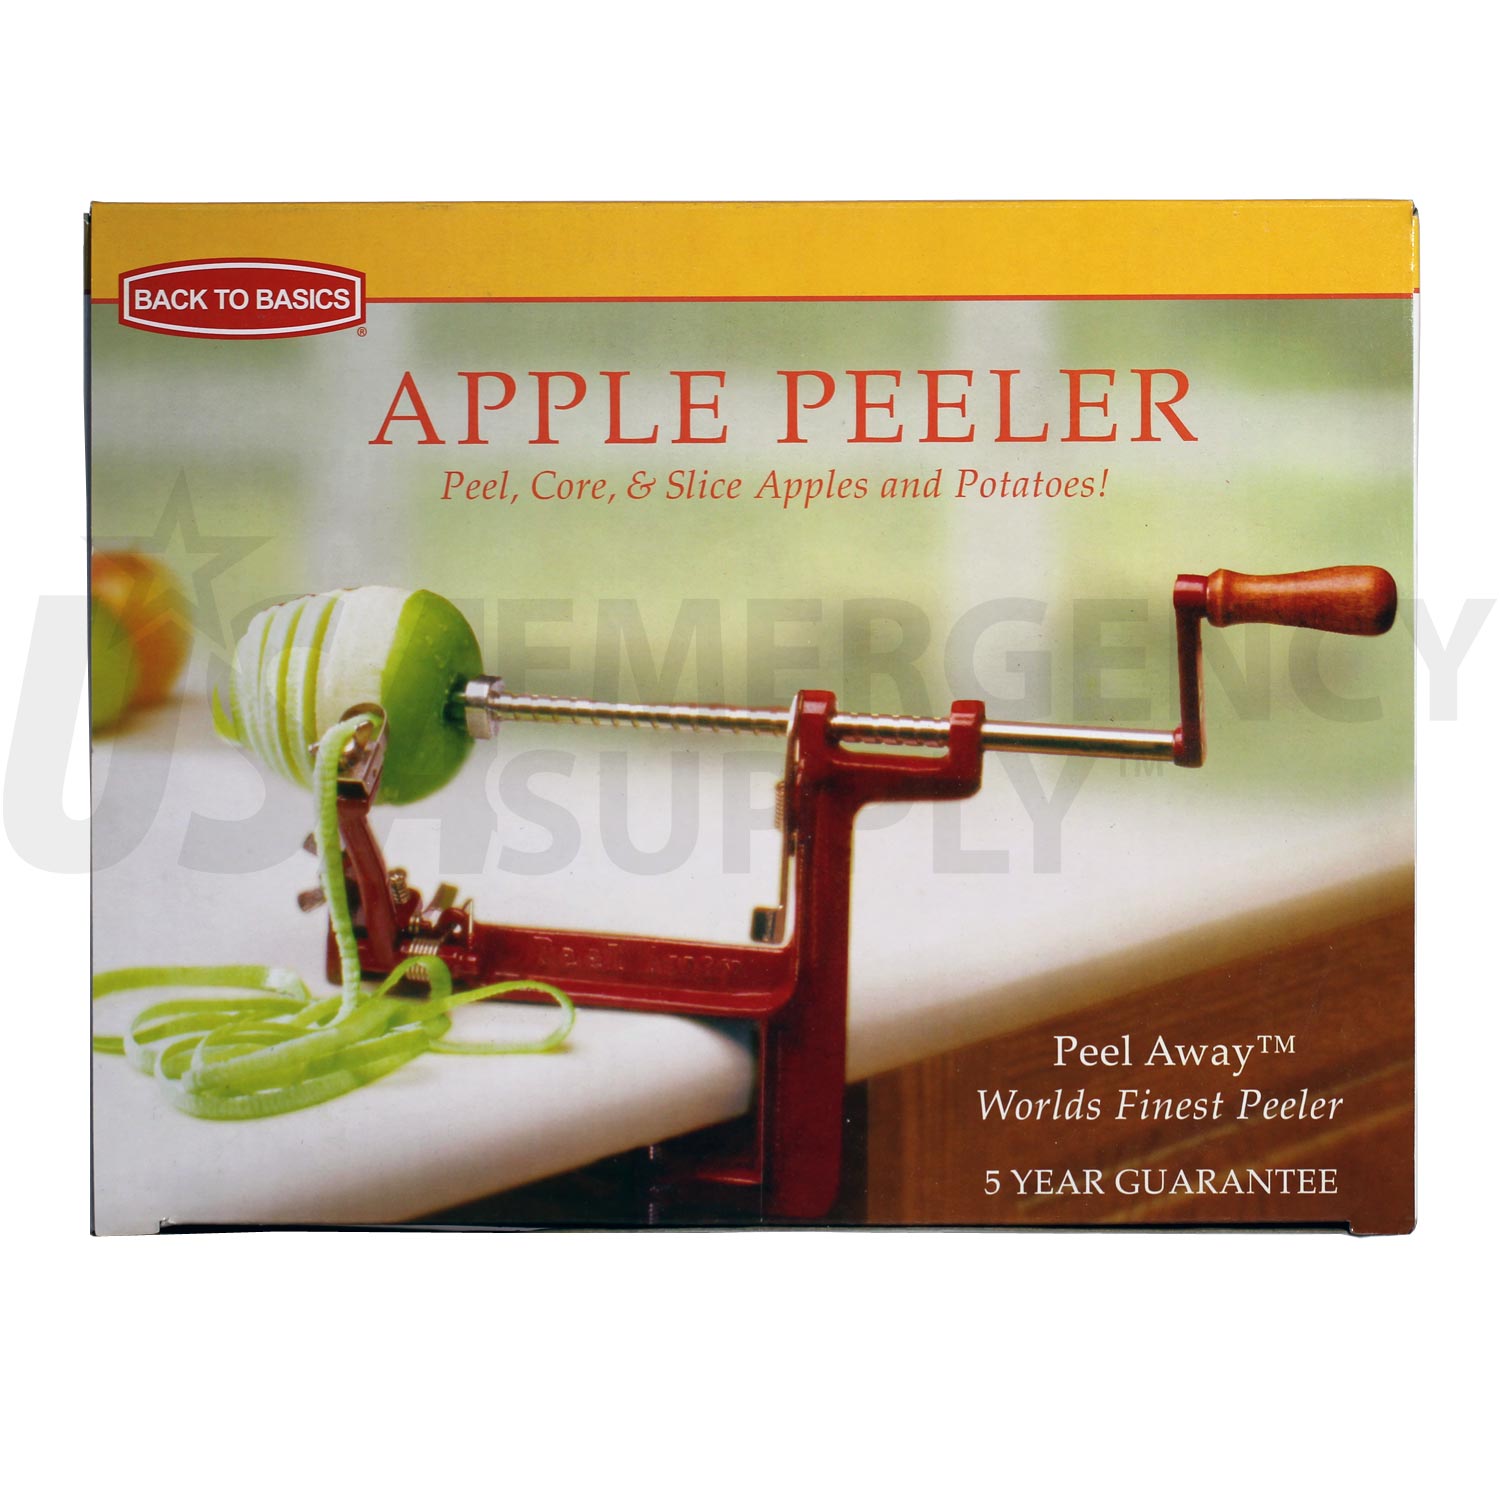 Back To Basics Apple And Potato Peeler first use 